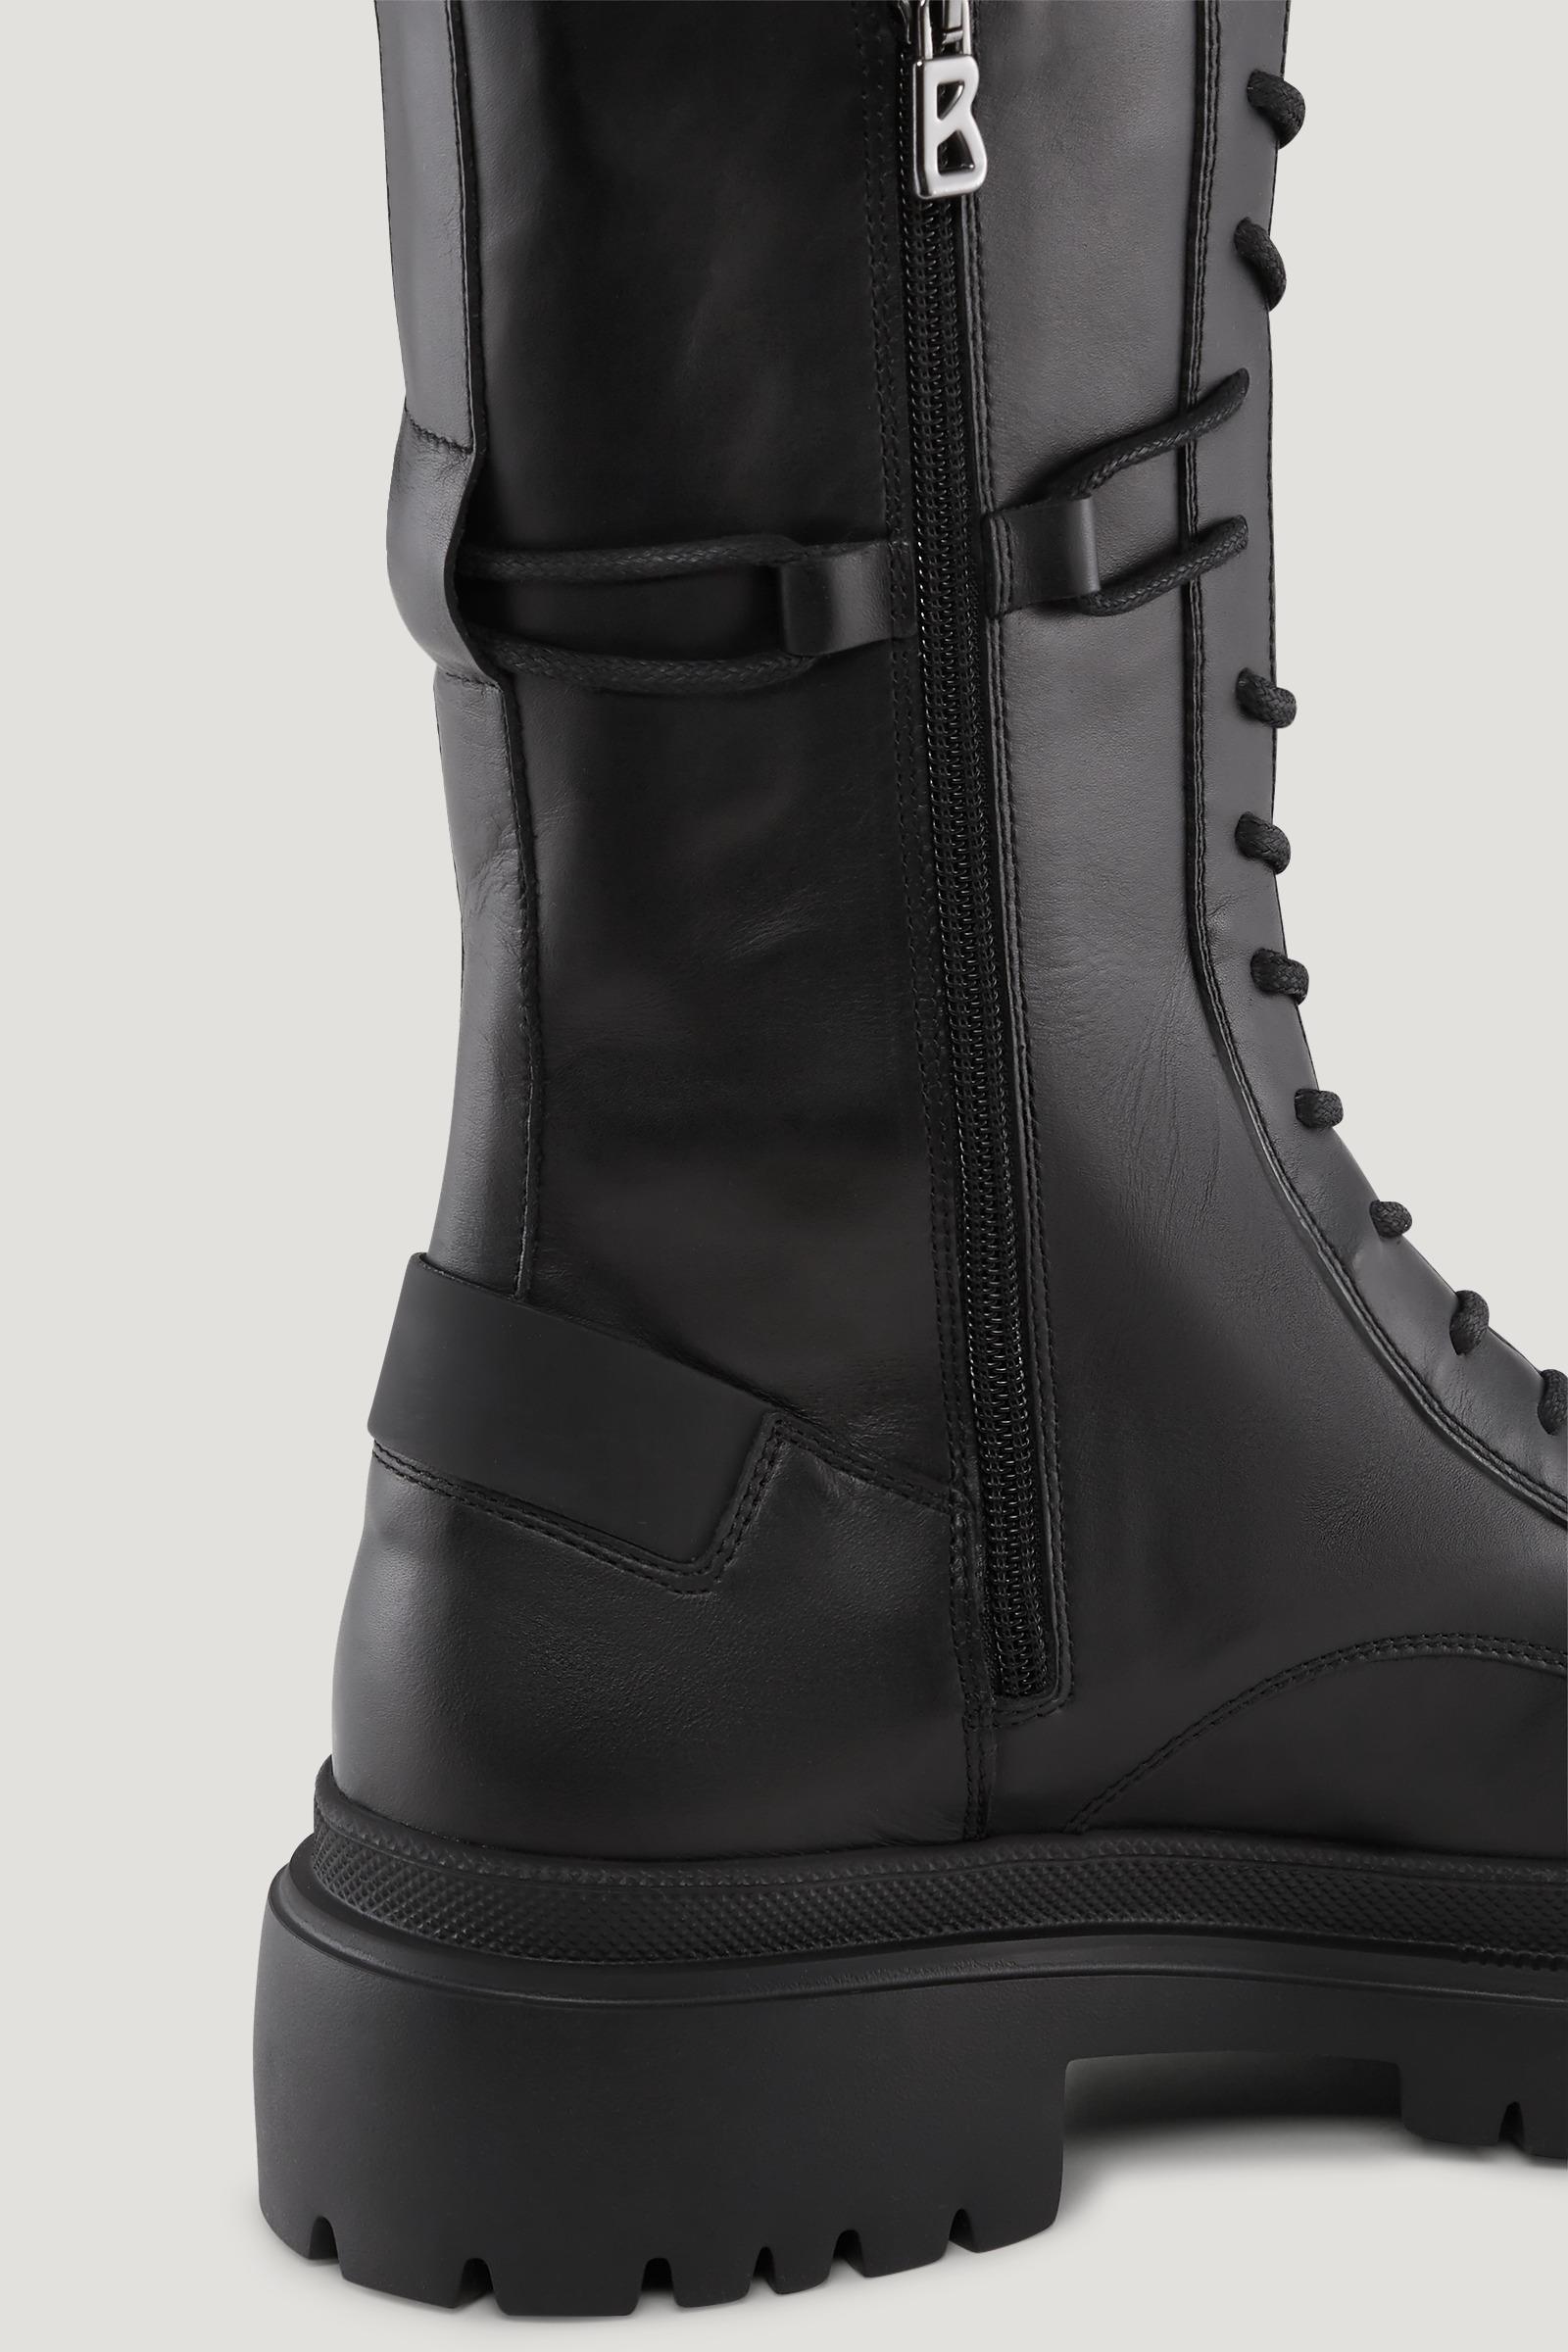 Bogner Chesa Alpina High Boots in Black | Lyst